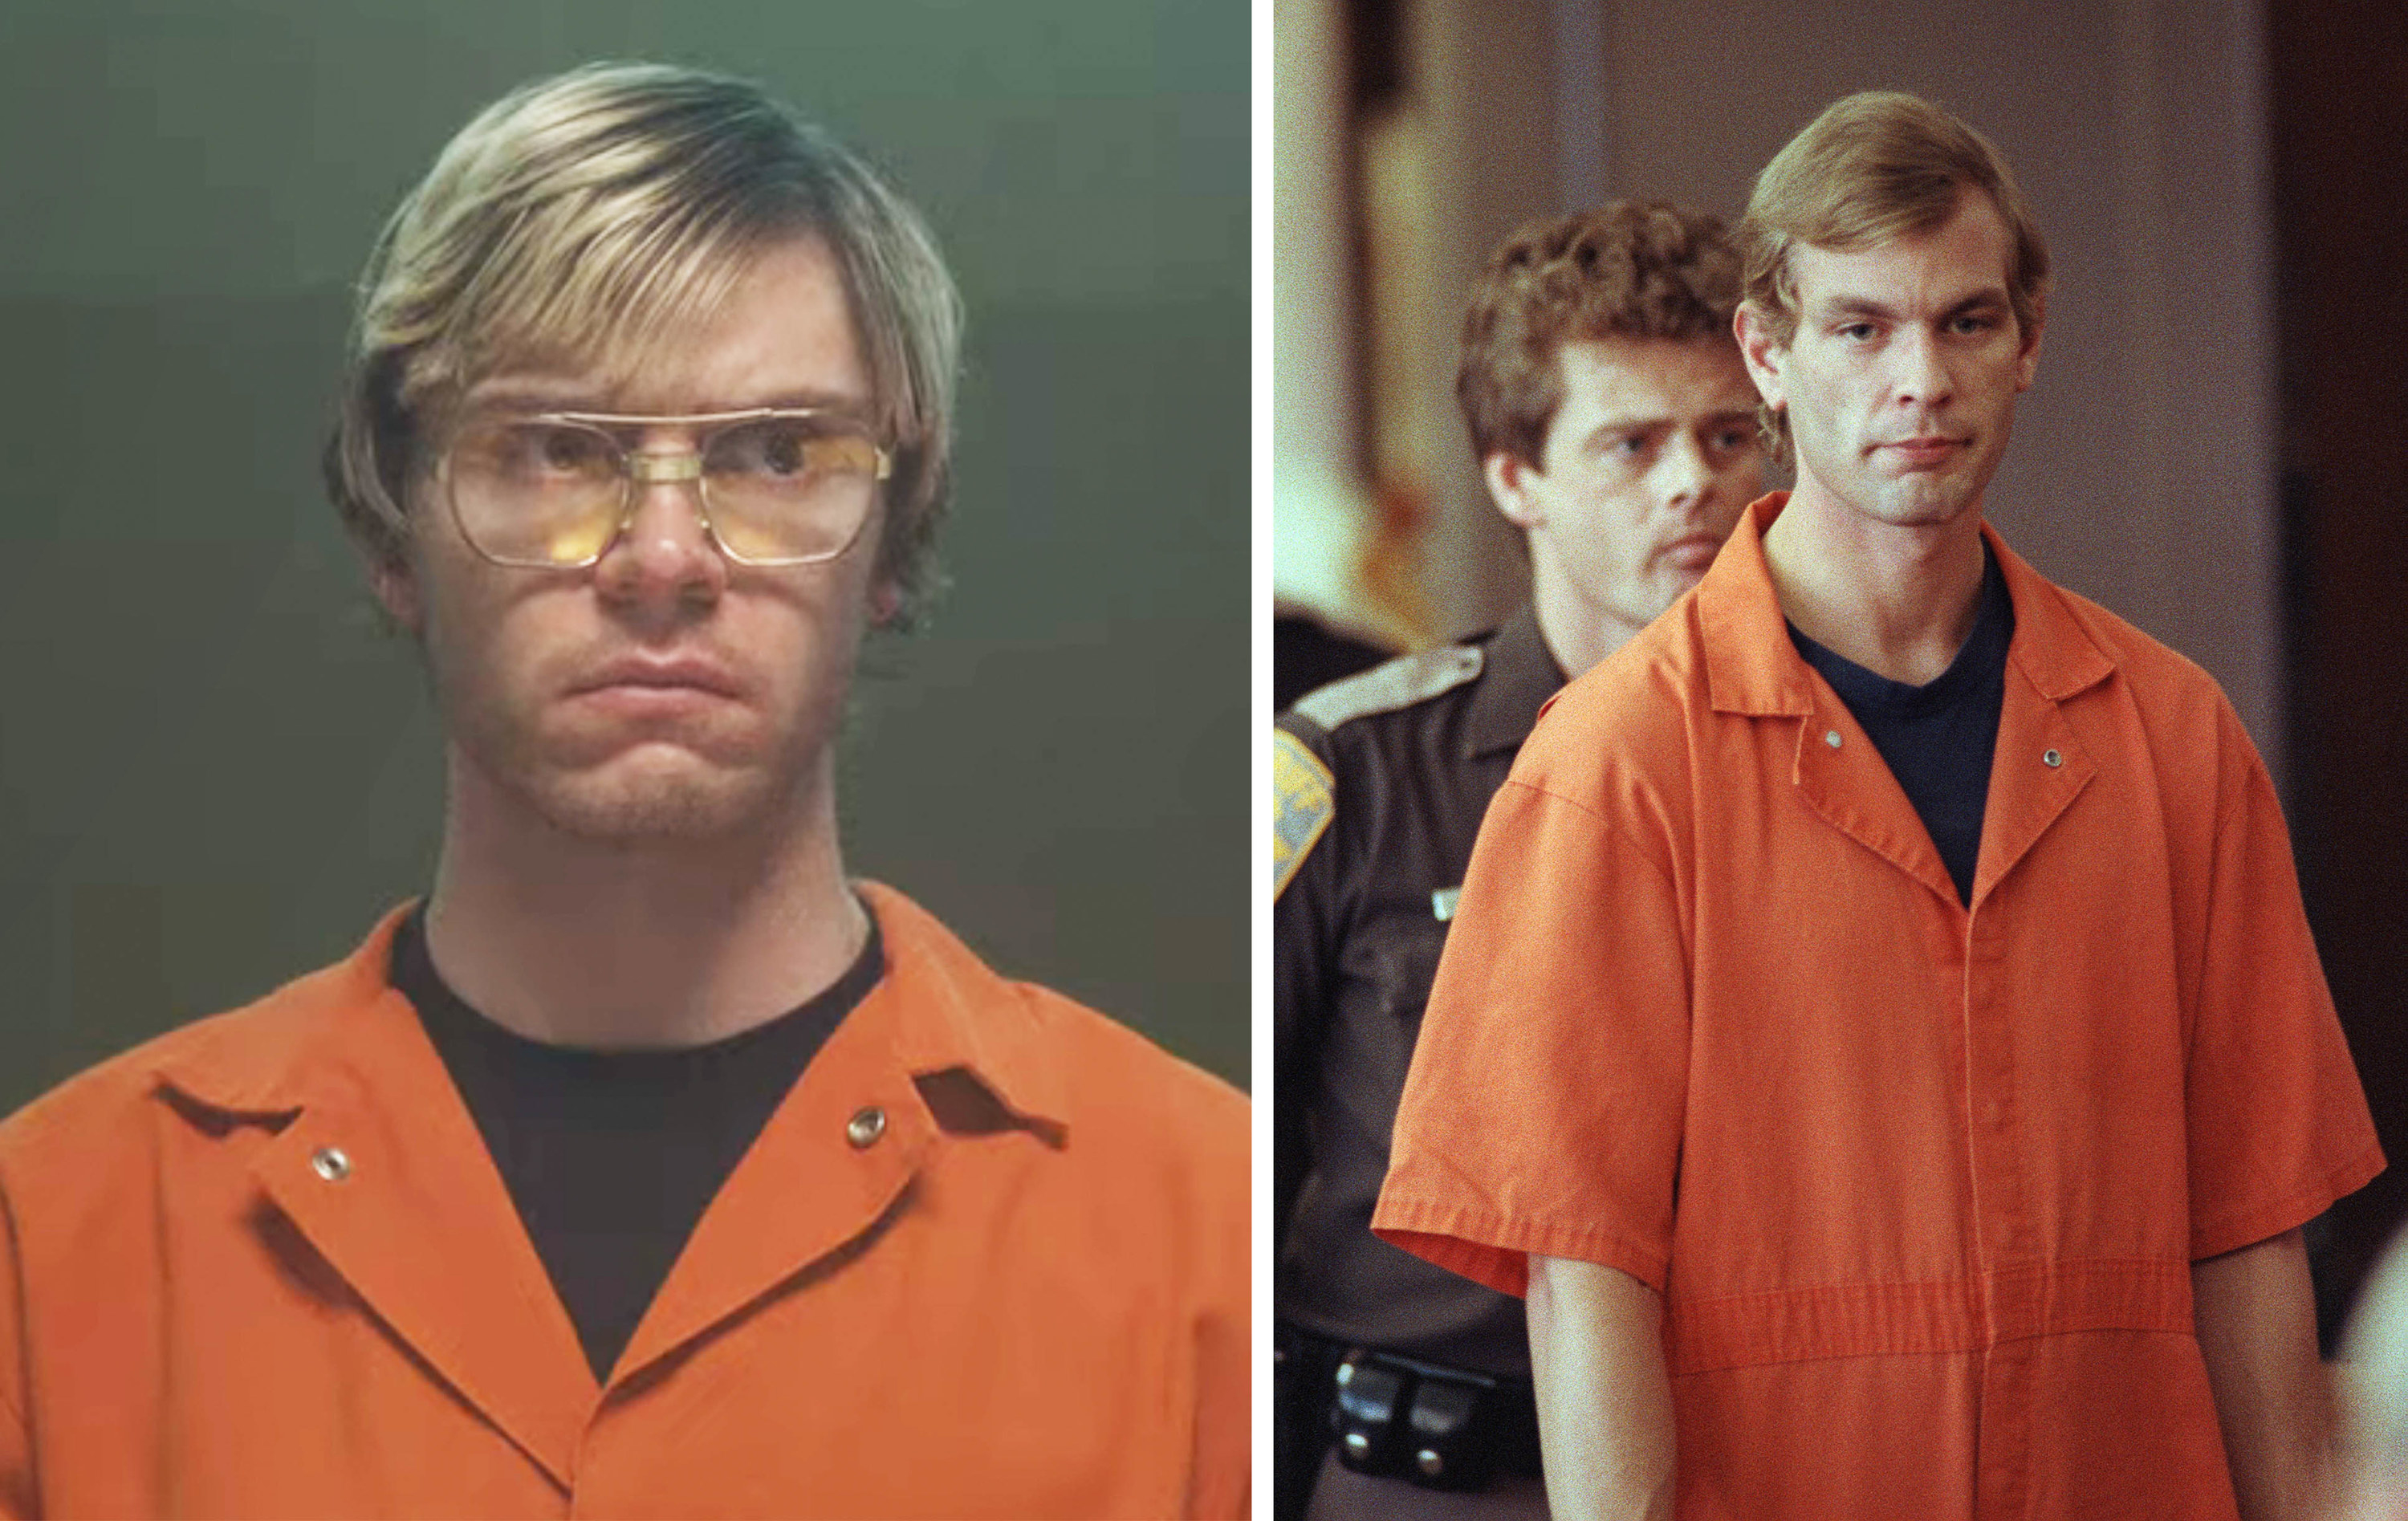 Evan as Jeffrey next to a photo of the real Jeffrey, both in an orange prison uniform